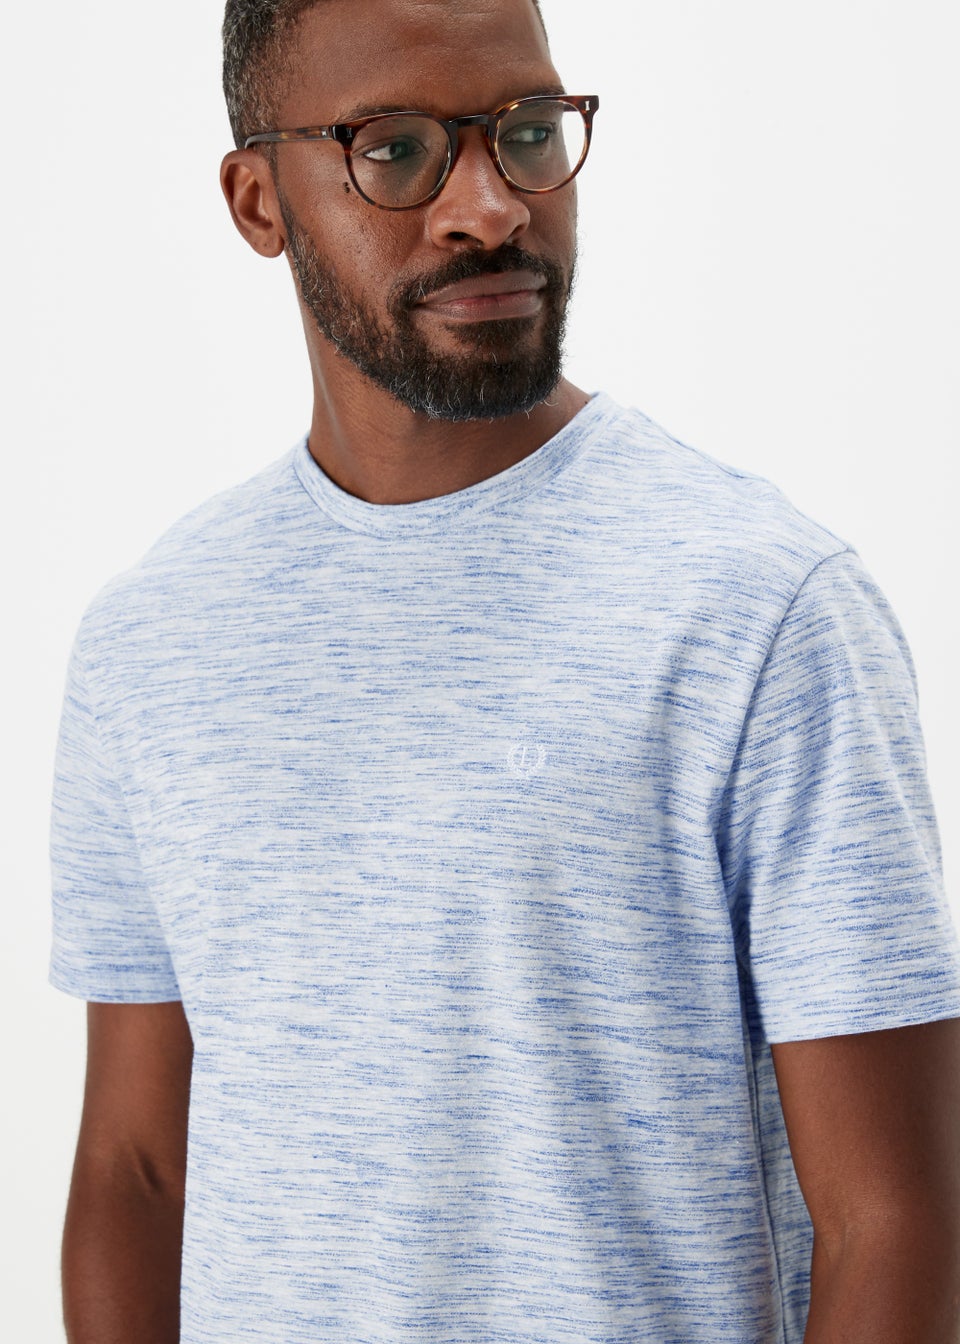 Lincoln Blue Space Dye T-Shirt